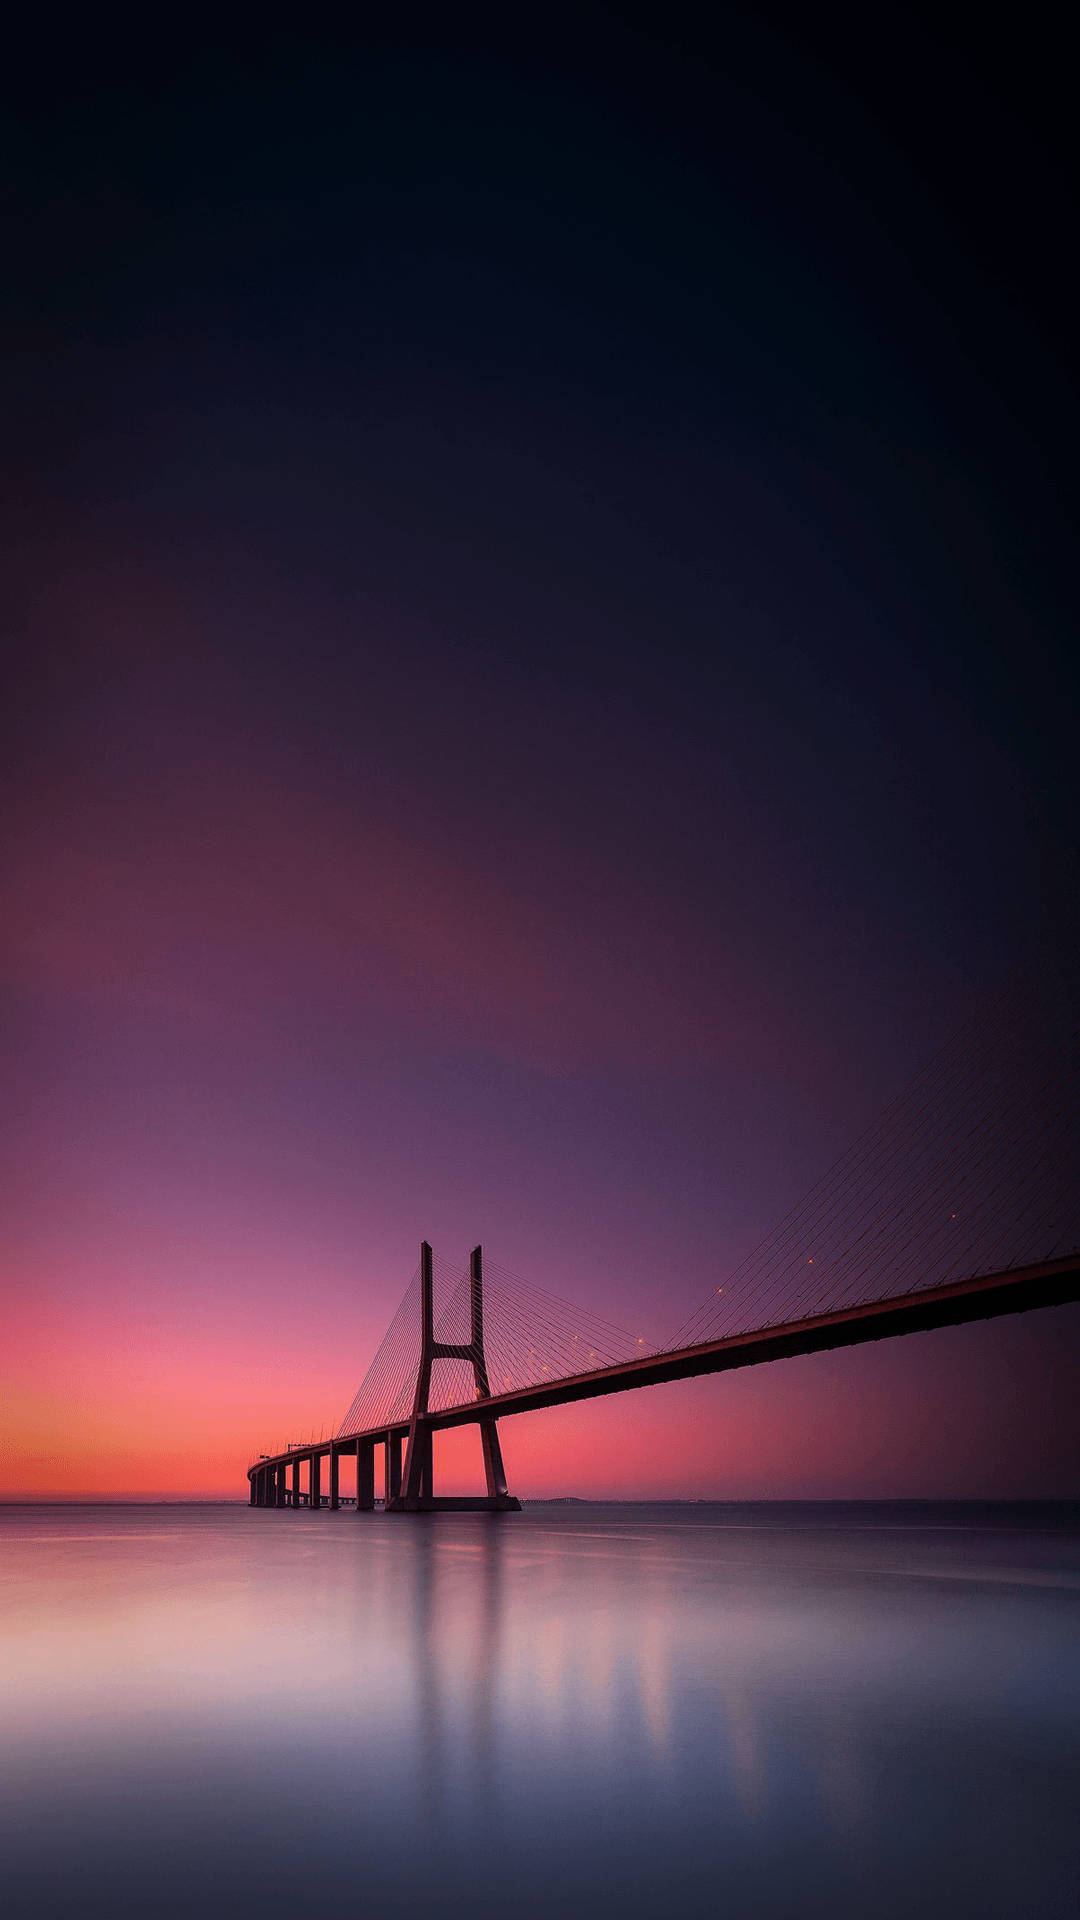 Best Smartphone Silhouette Of A Bridge Background